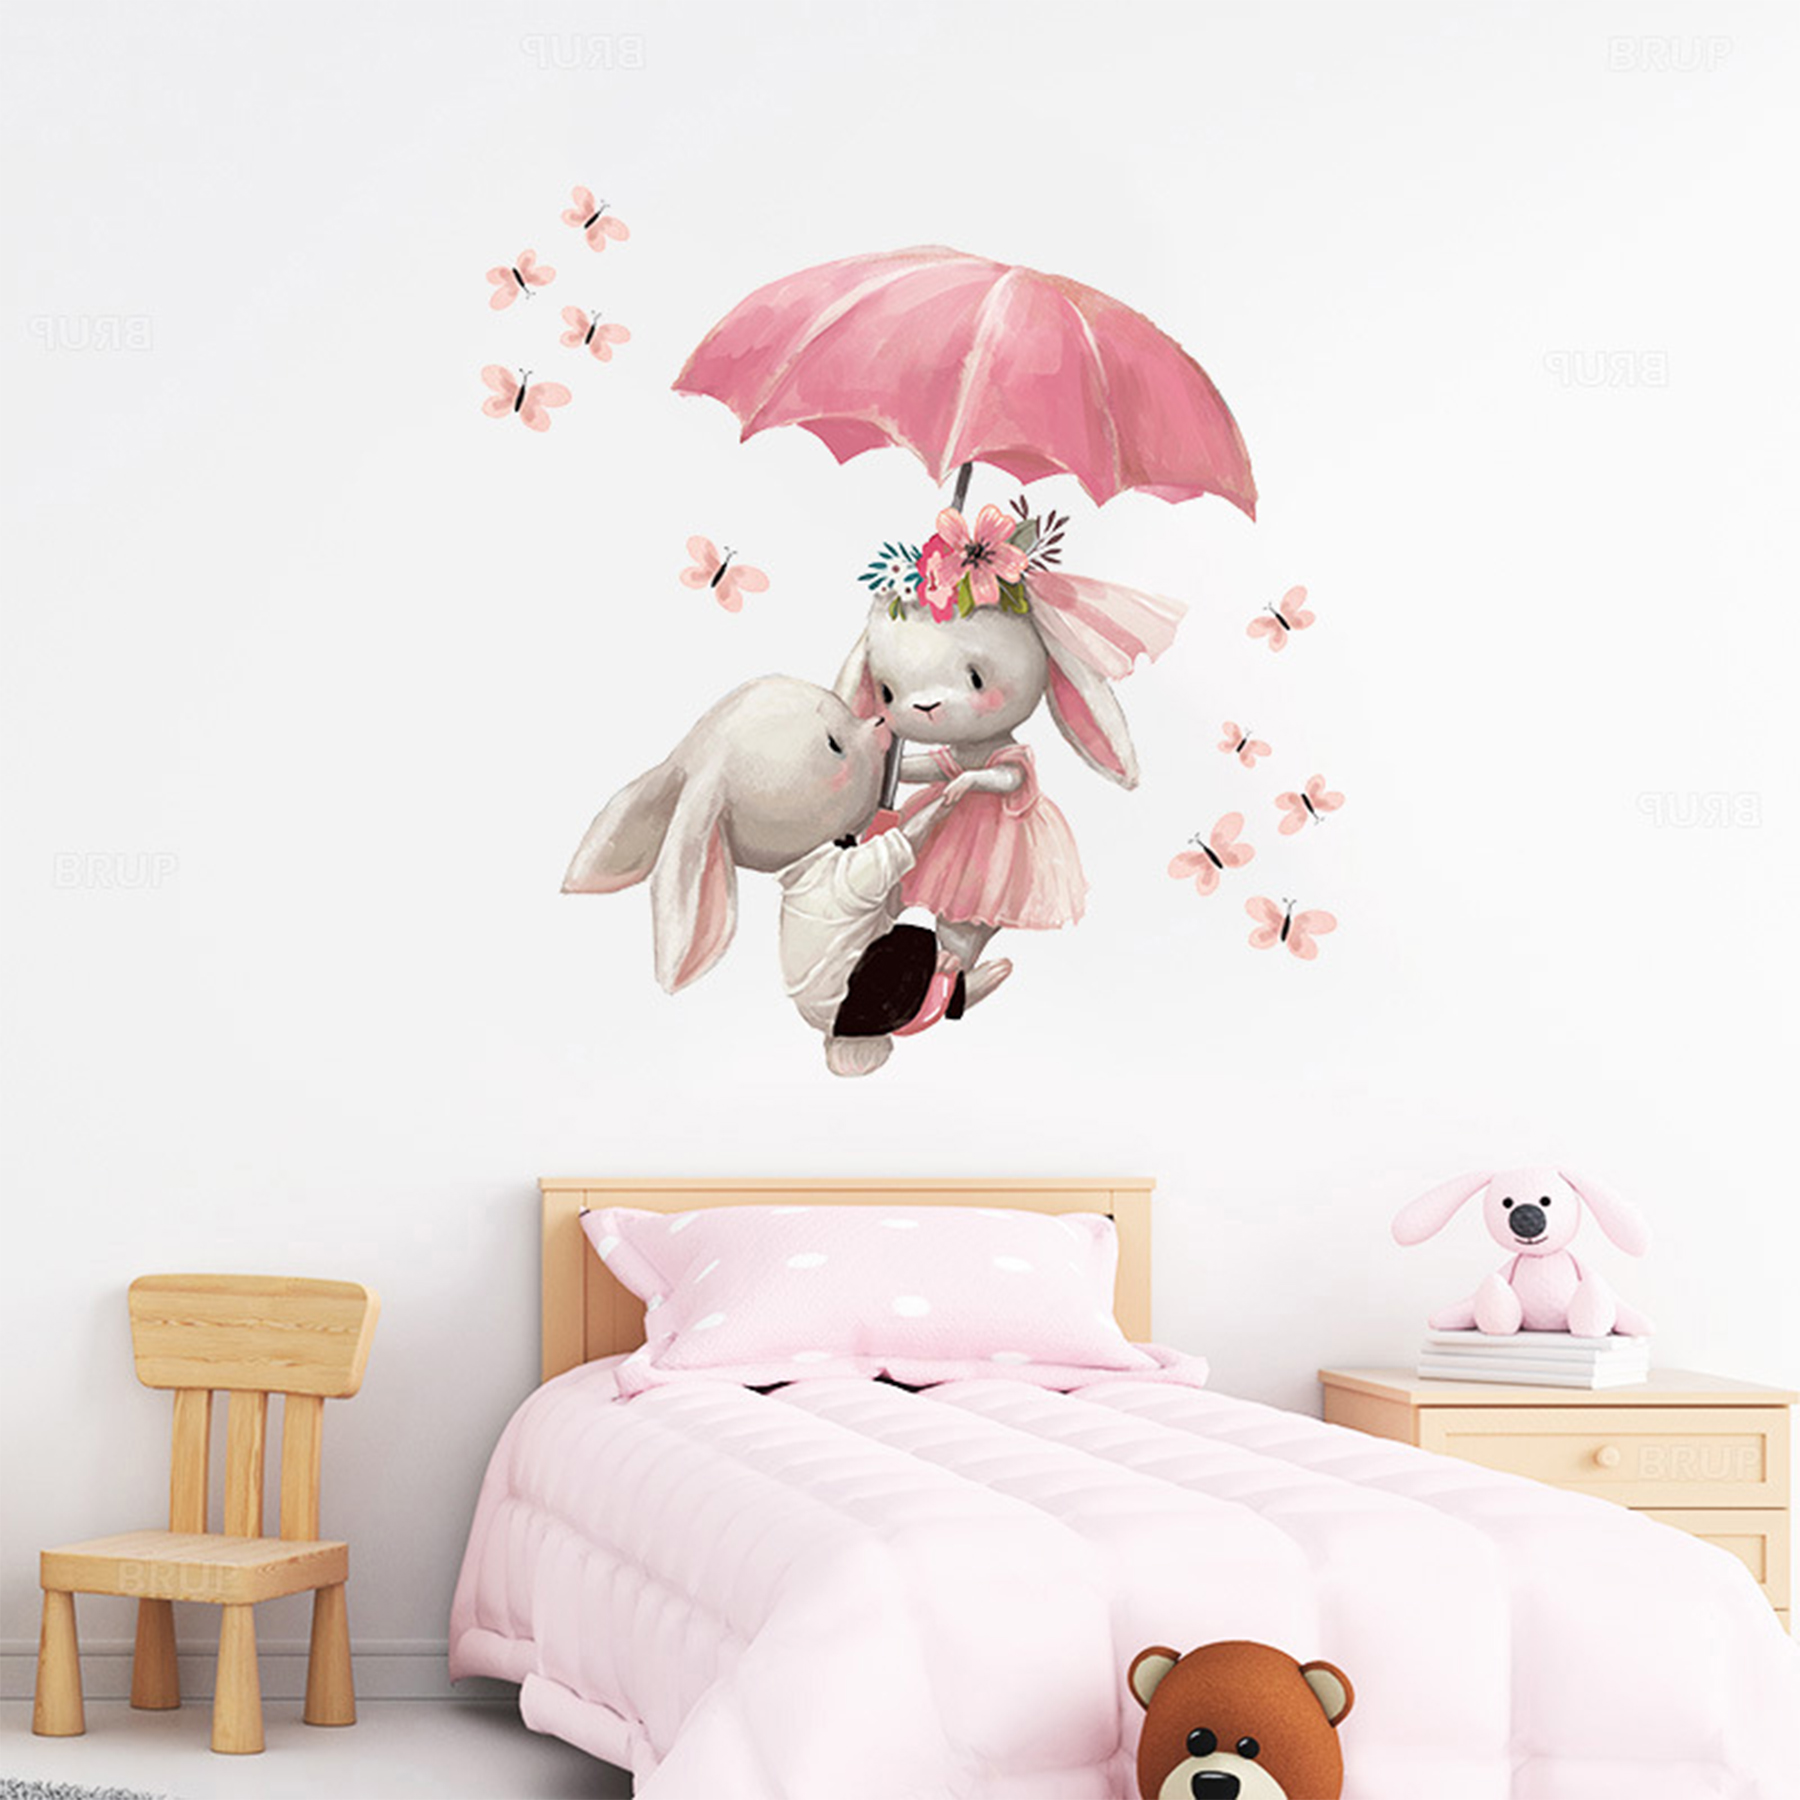 Sipo Wall Sticker Bunnies With Umbrella